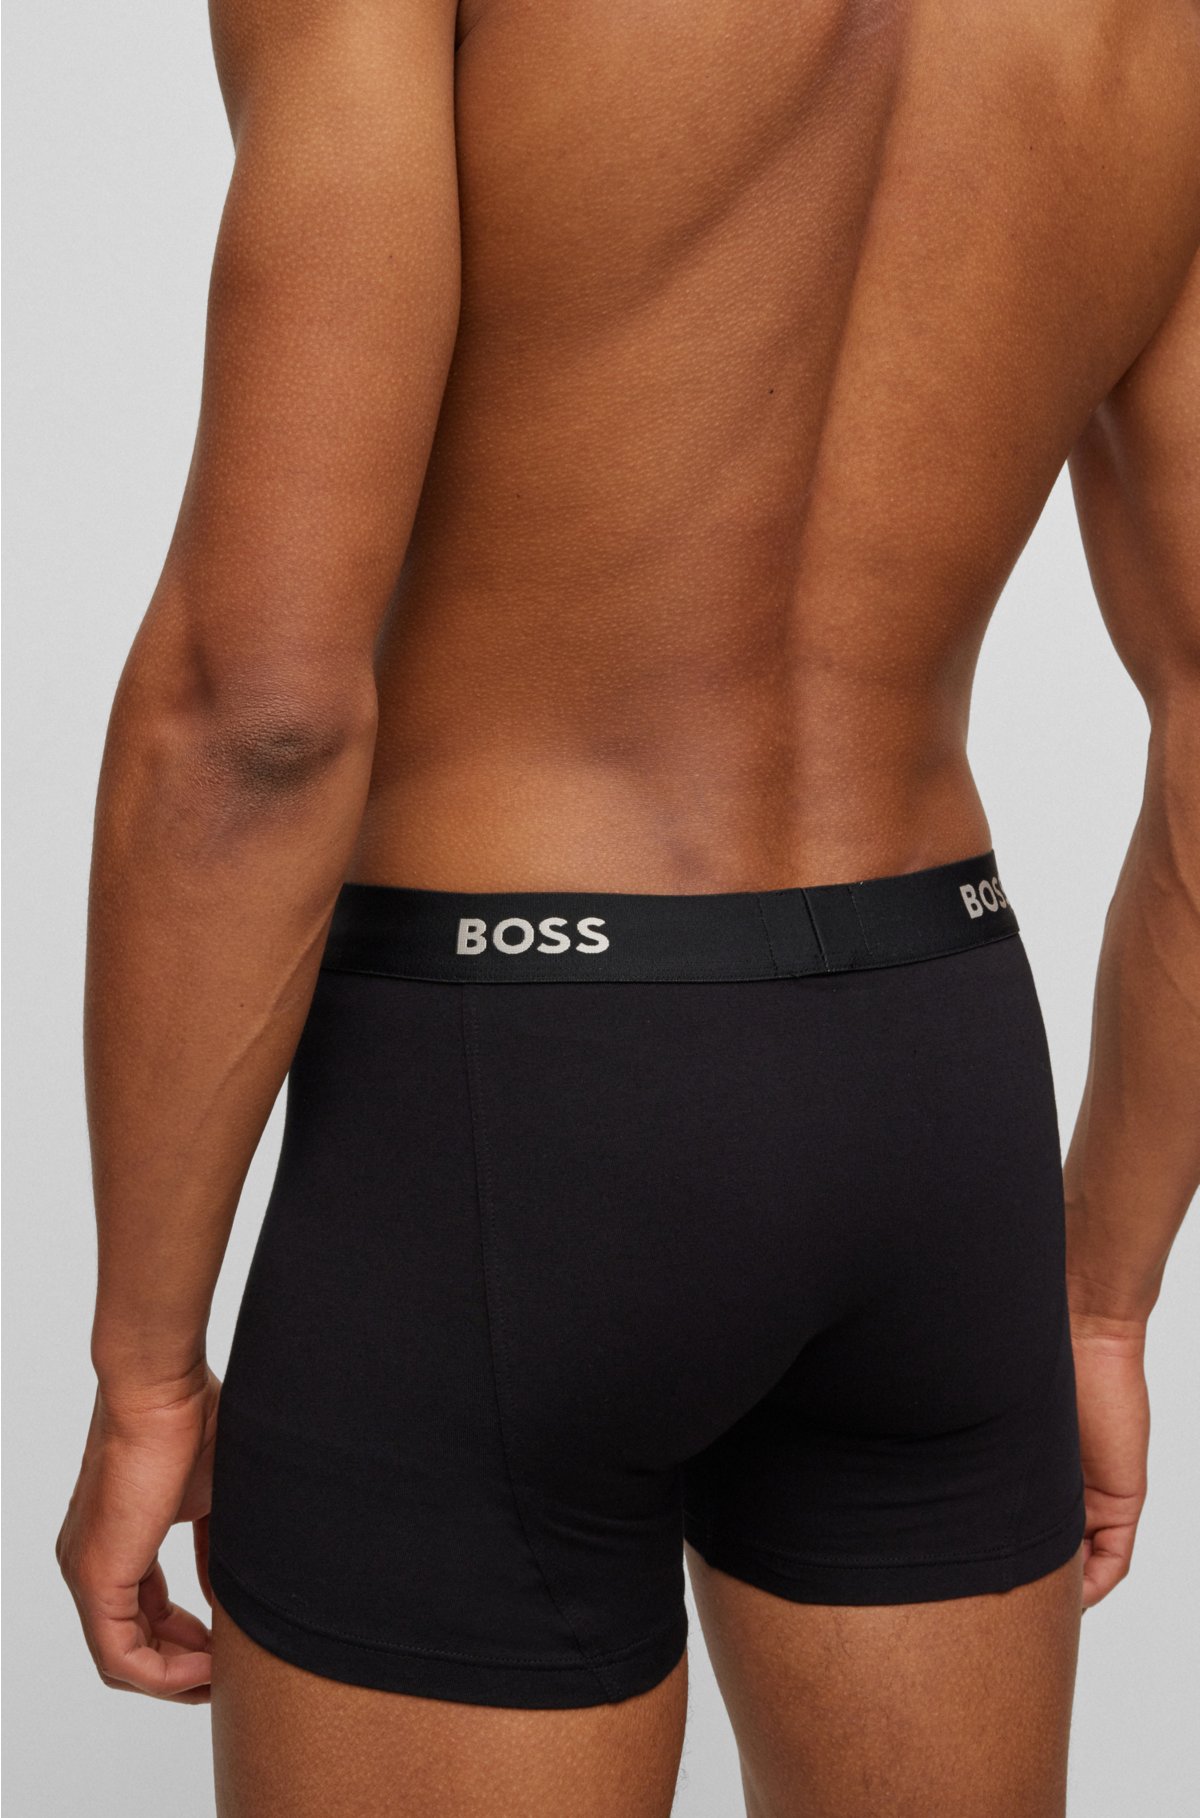 BOSS mens 2-pack Ultra Soft Modal Boxer Briefs, Black, Small US at